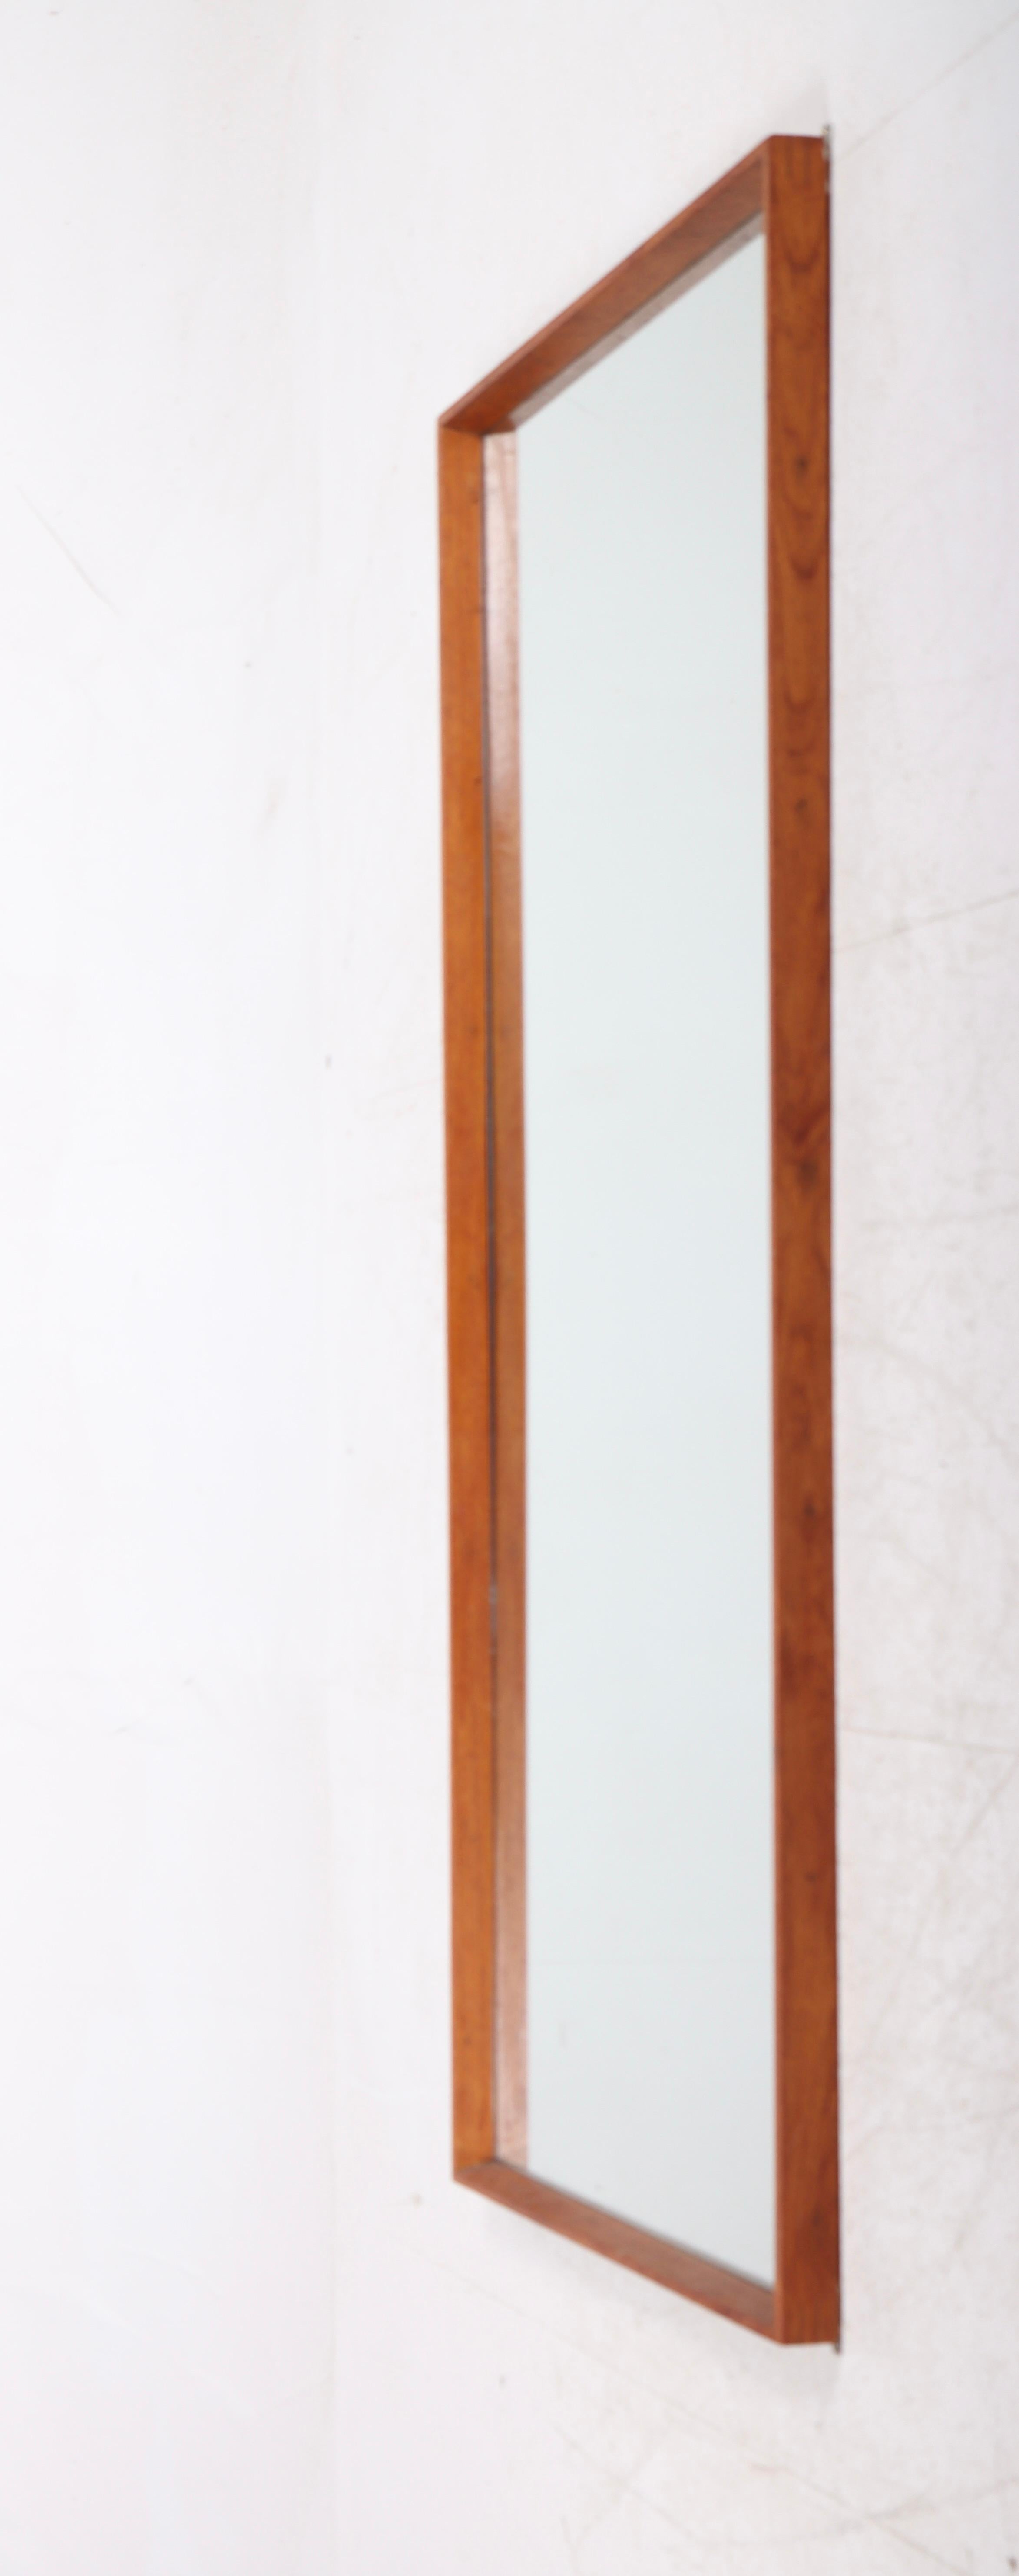 Scandinavian Modern Large Midcentury Wall Mirror in Teak, Made in Sweden, 1950s For Sale